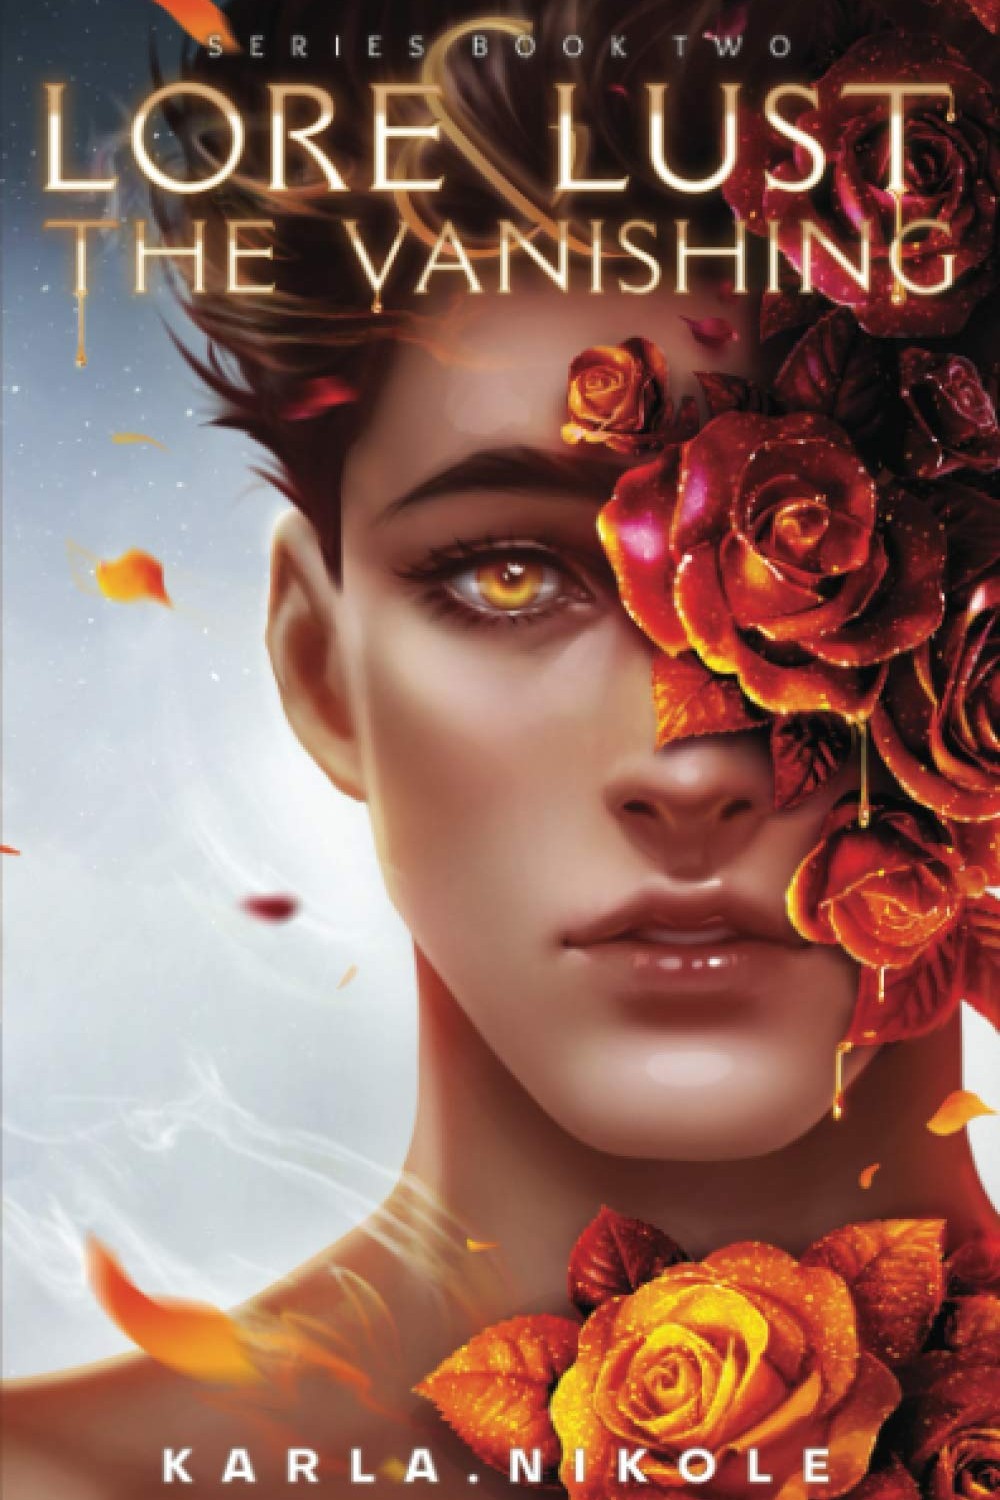 The Vanishing by Karla Nikole (Lore & Lust Book 2)